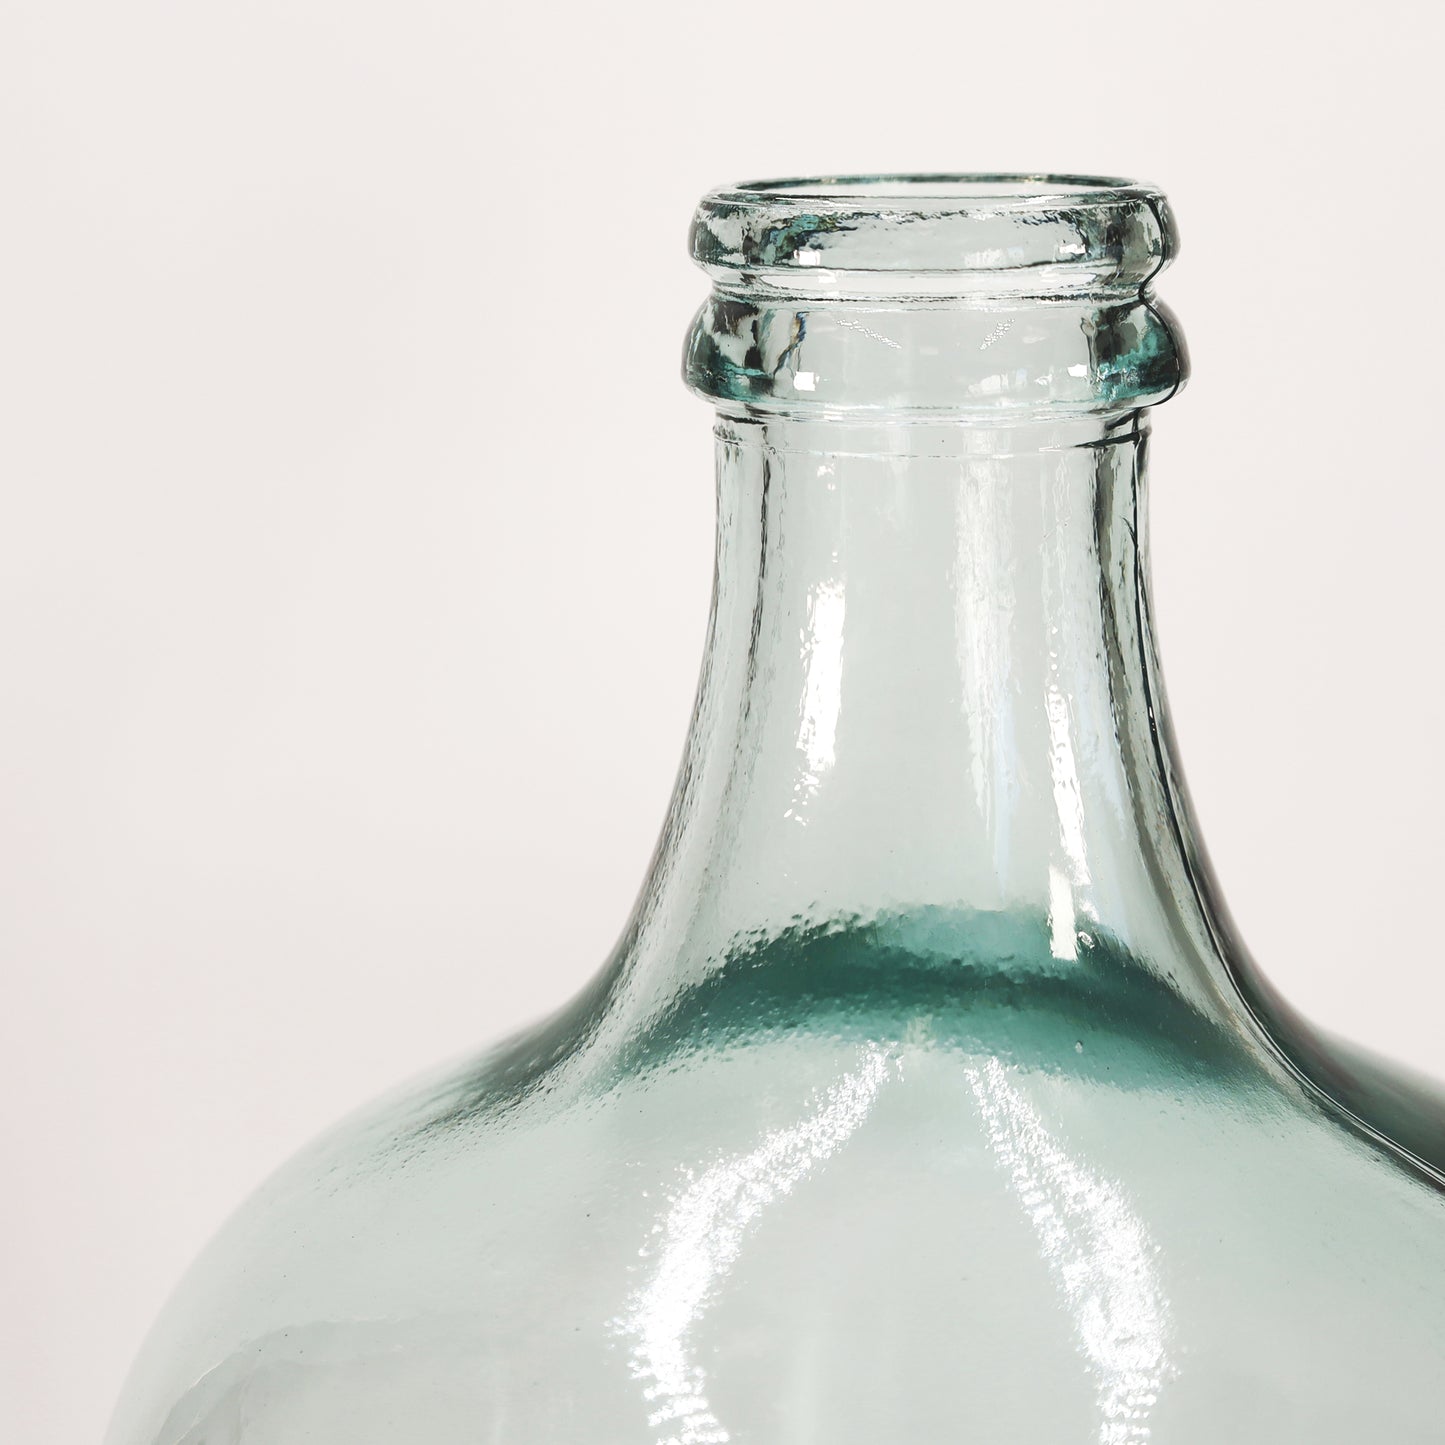 Vase - Flaschenkaraffe "Botella" klar - 42 cm